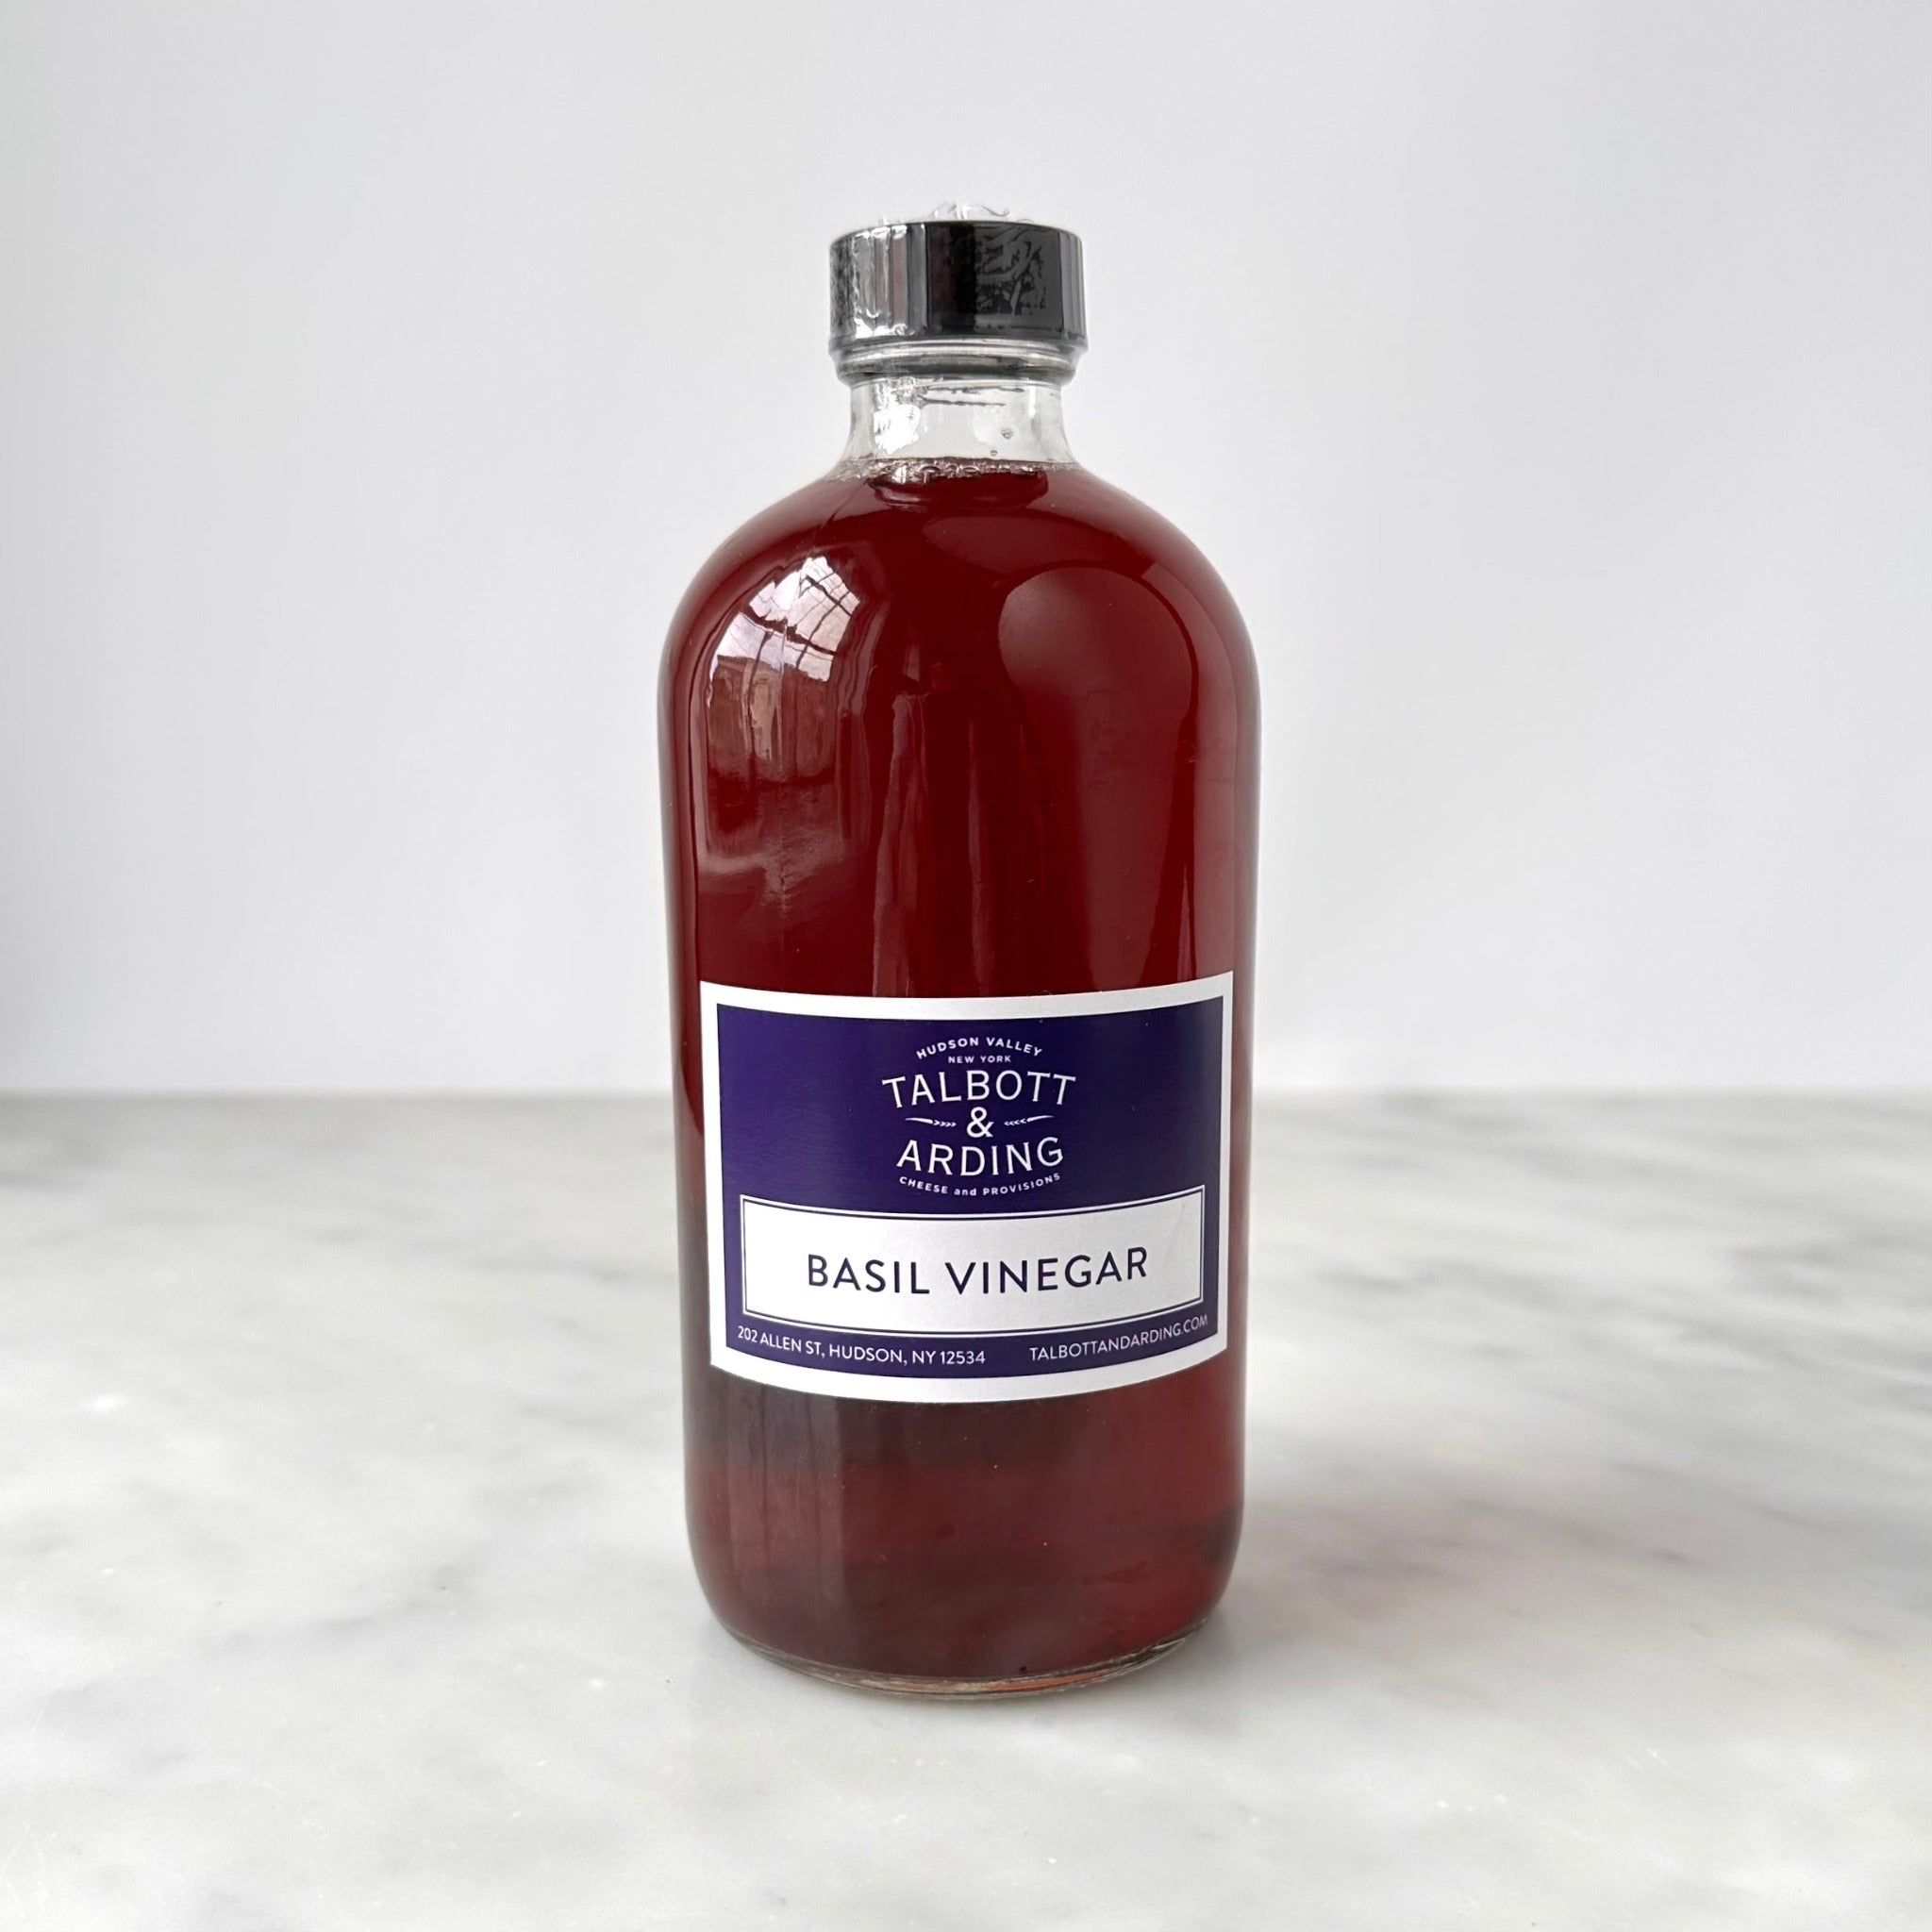 Talbott & Arding housemade basil-infused vinegar featuring Hudson Valley produce